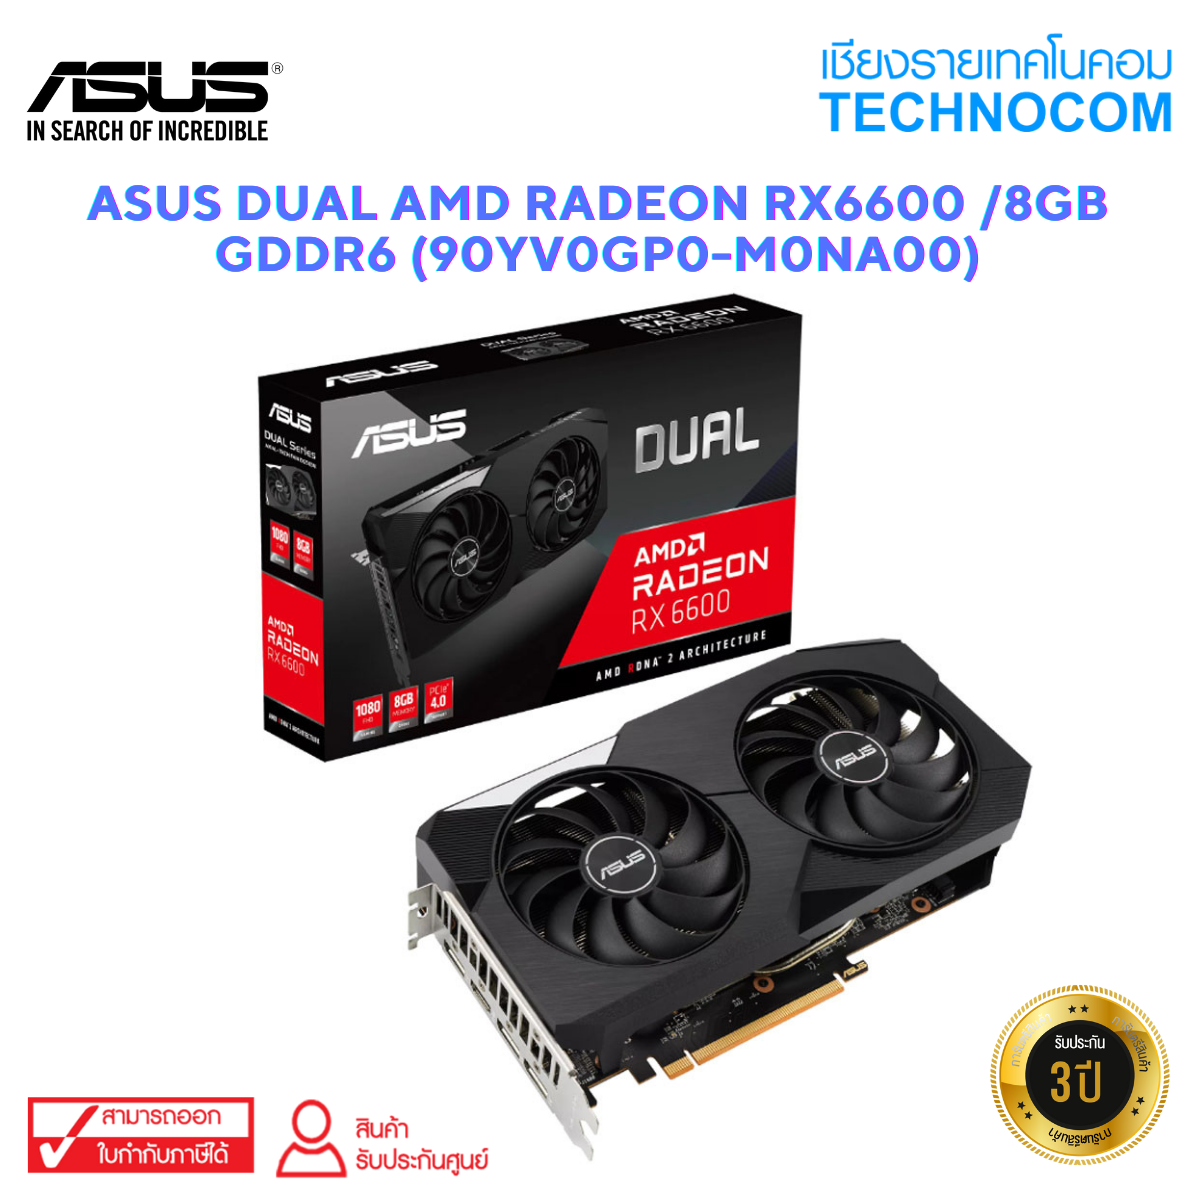 ASUS DUAL AMD RADEON RX6600 /8GB GDDR6 (90YV0GP0-M0NA00)